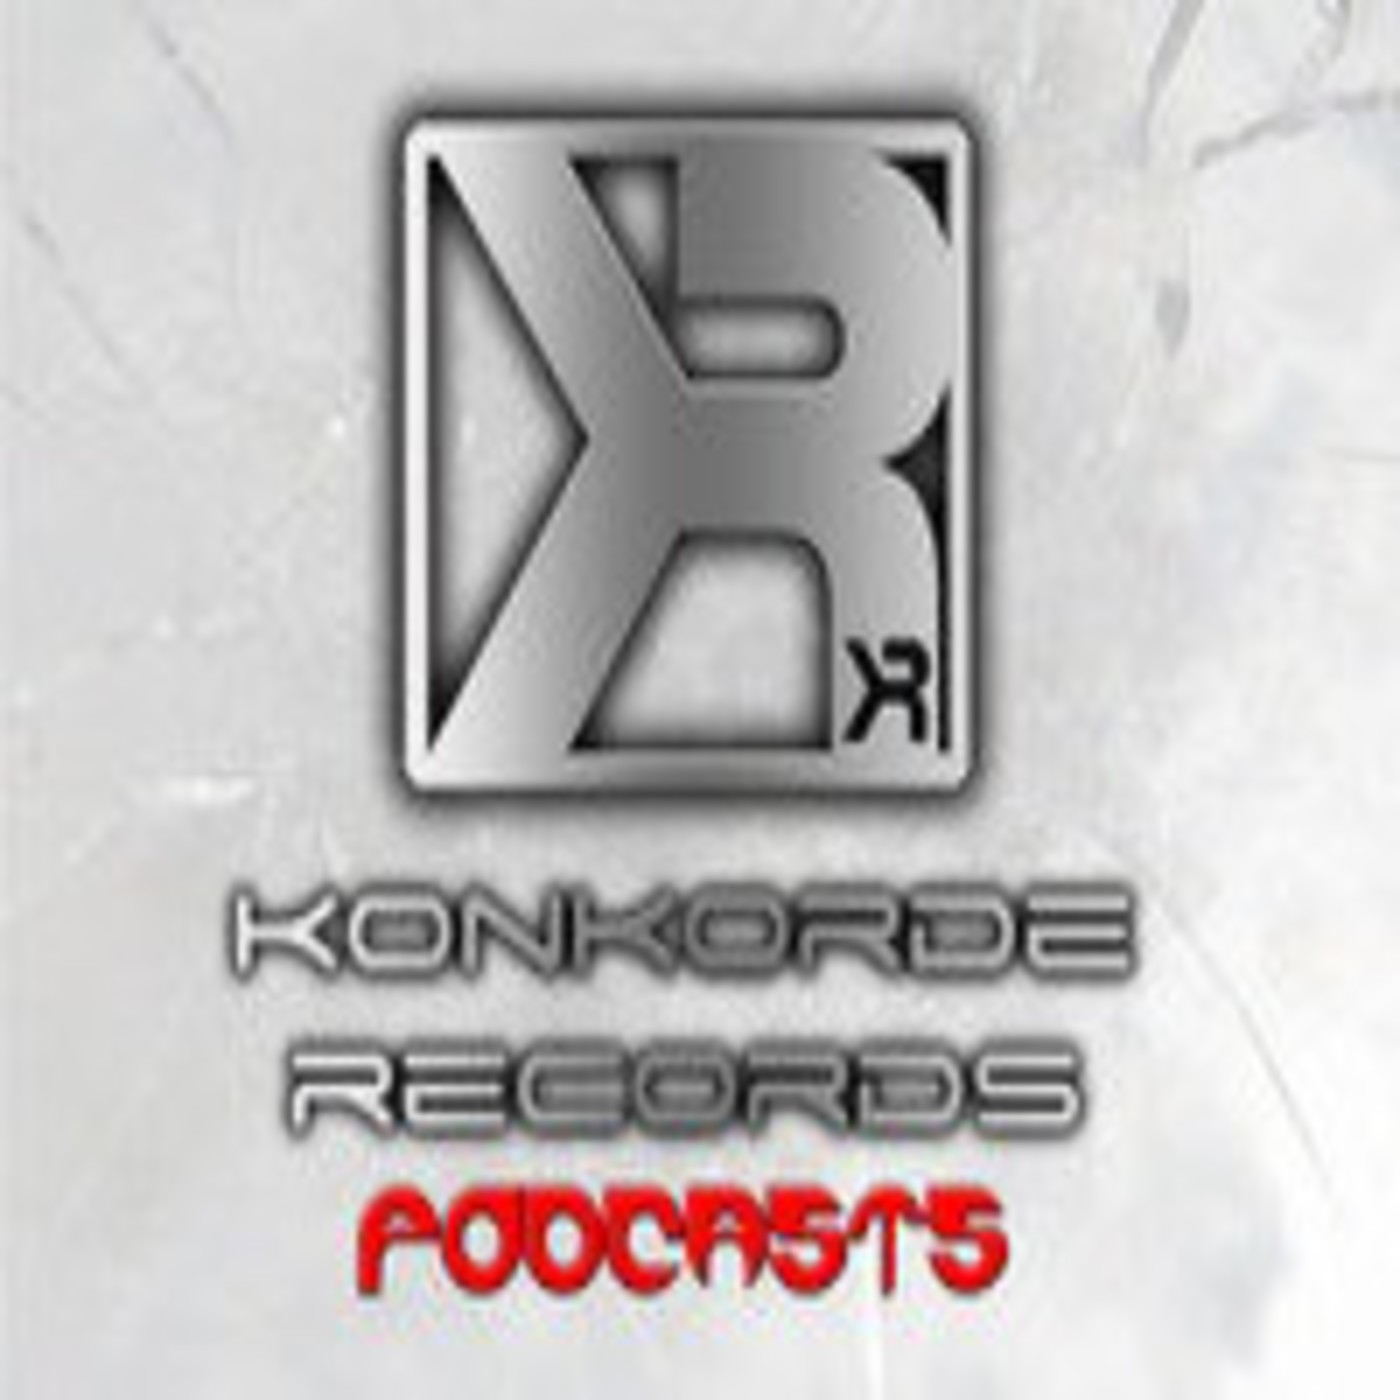 Podcast KonKorde Records